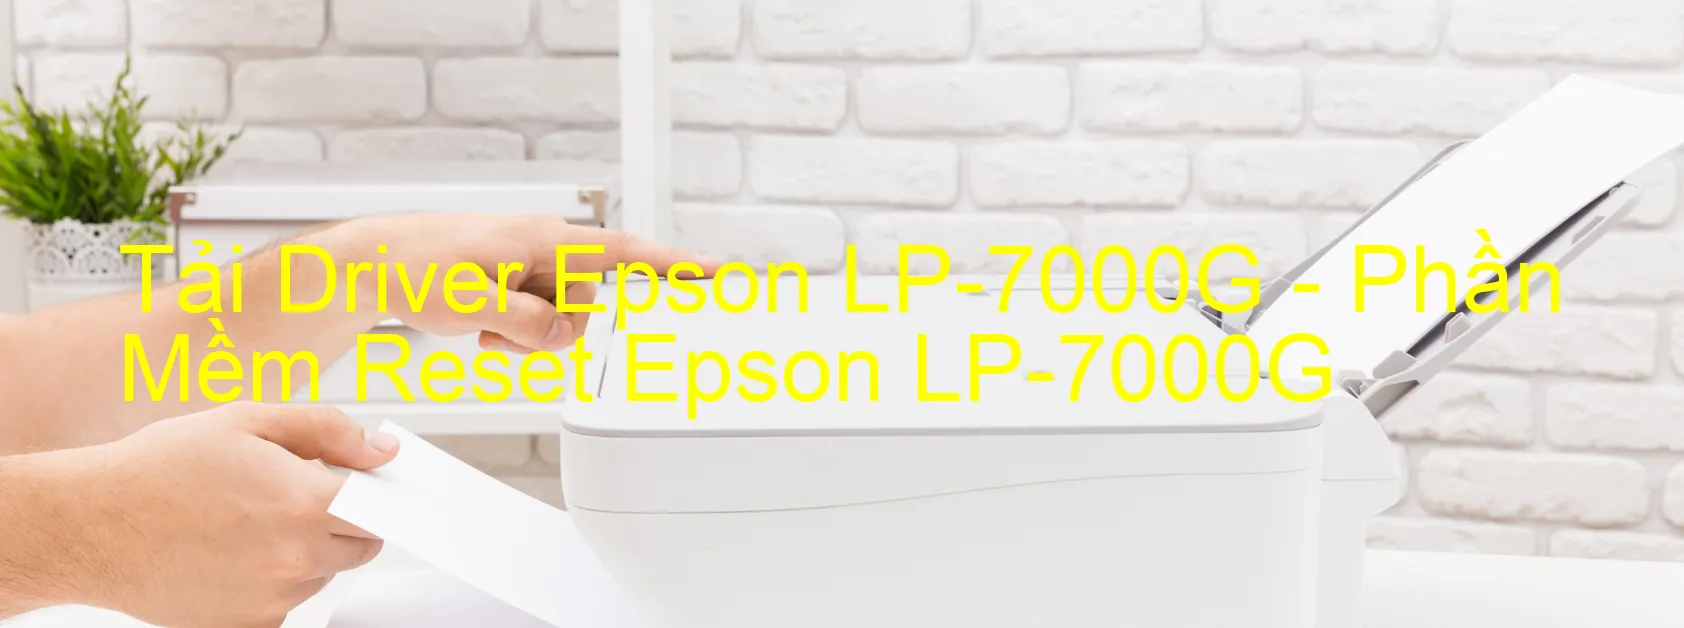 Driver Epson LP-7000G, Phần Mềm Reset Epson LP-7000G